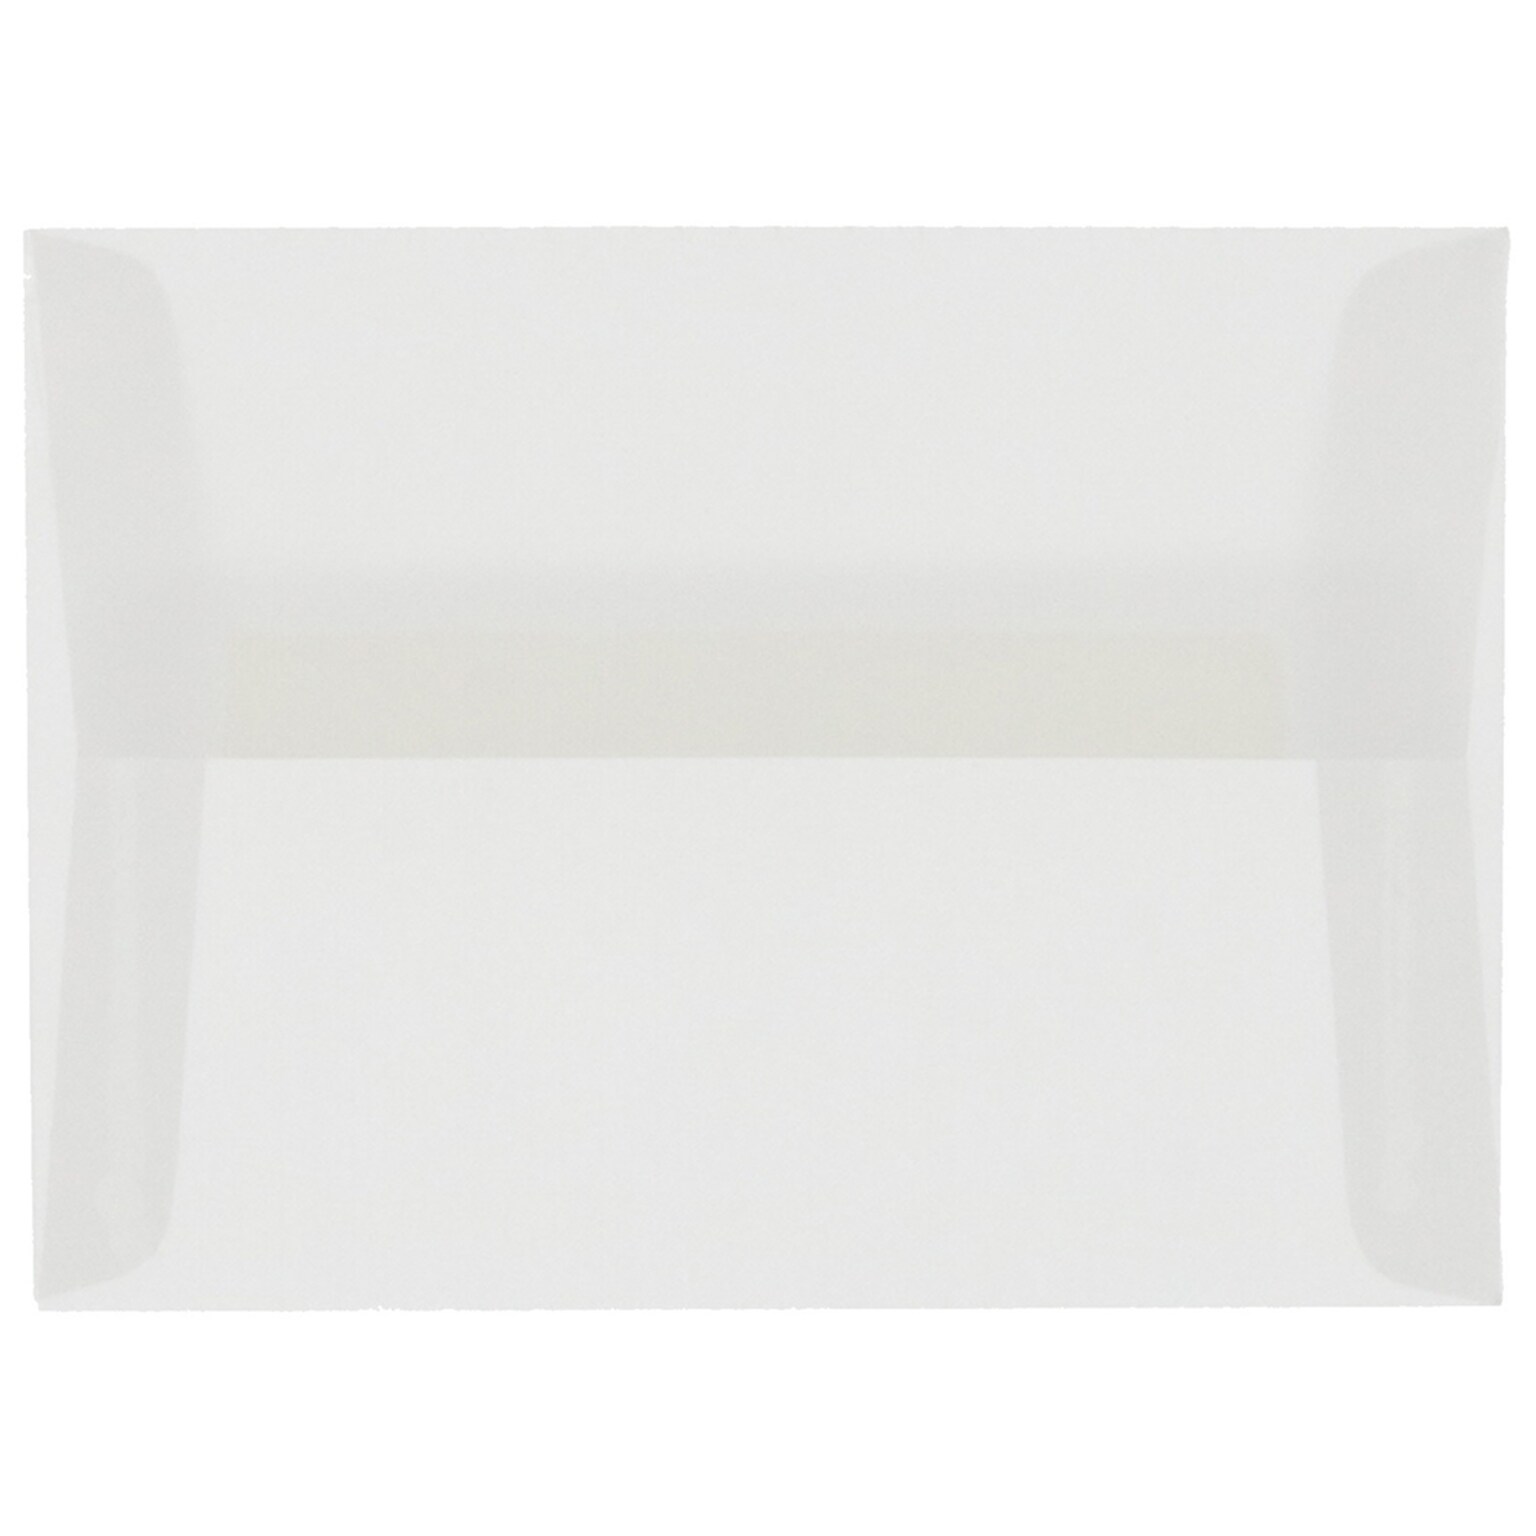 JAM Paper A9 Translucent Vellum Invitation Envelopes, 5.75 x 8.75, Clear, 25/Pack (900964615)